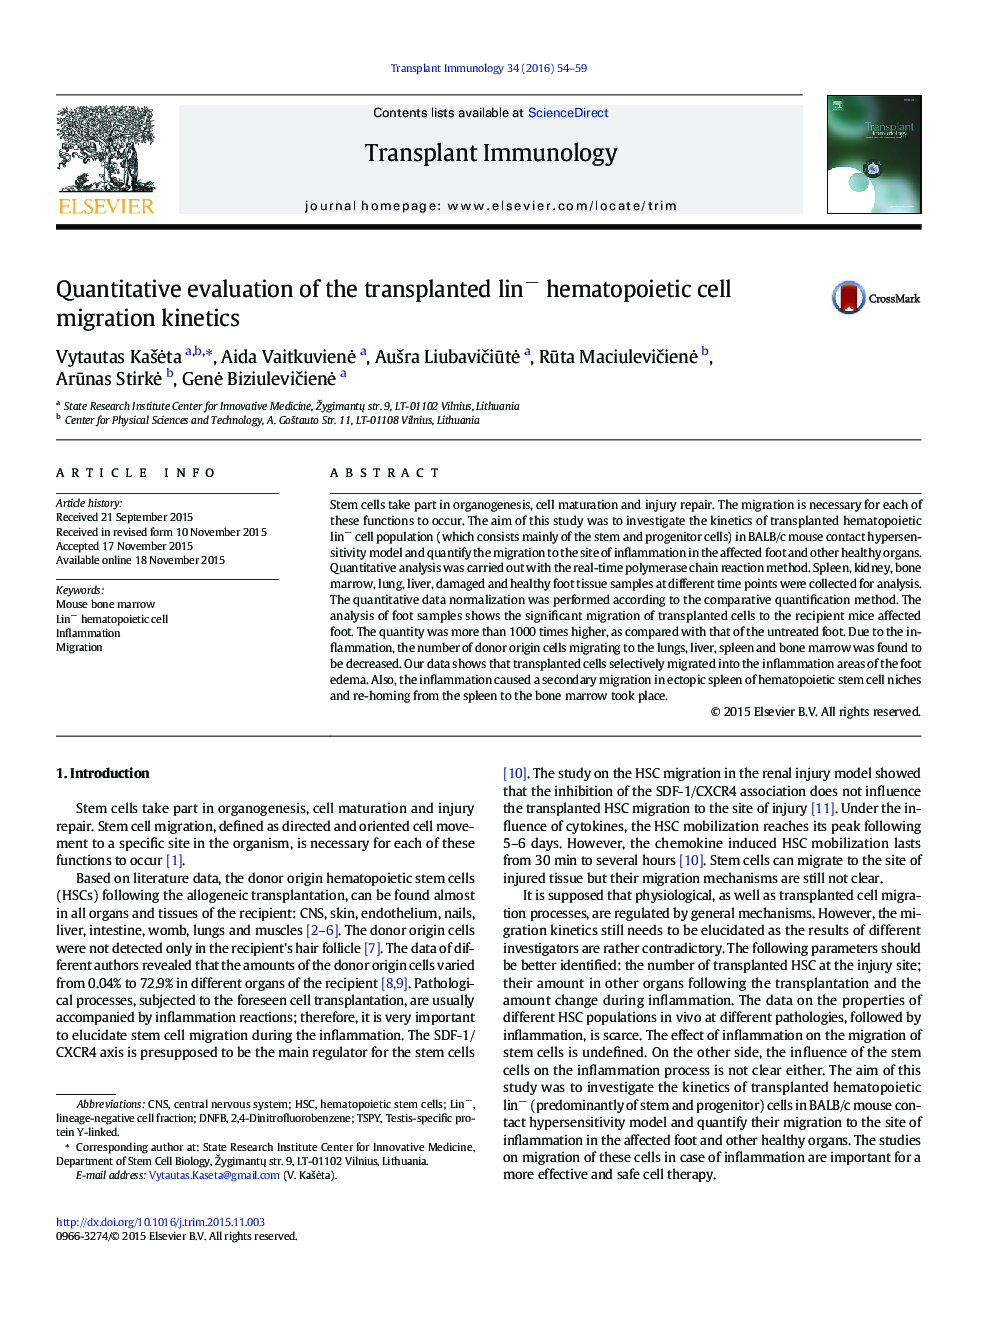 Quantitative evaluation of the transplanted lin− hematopoietic cell migration kinetics